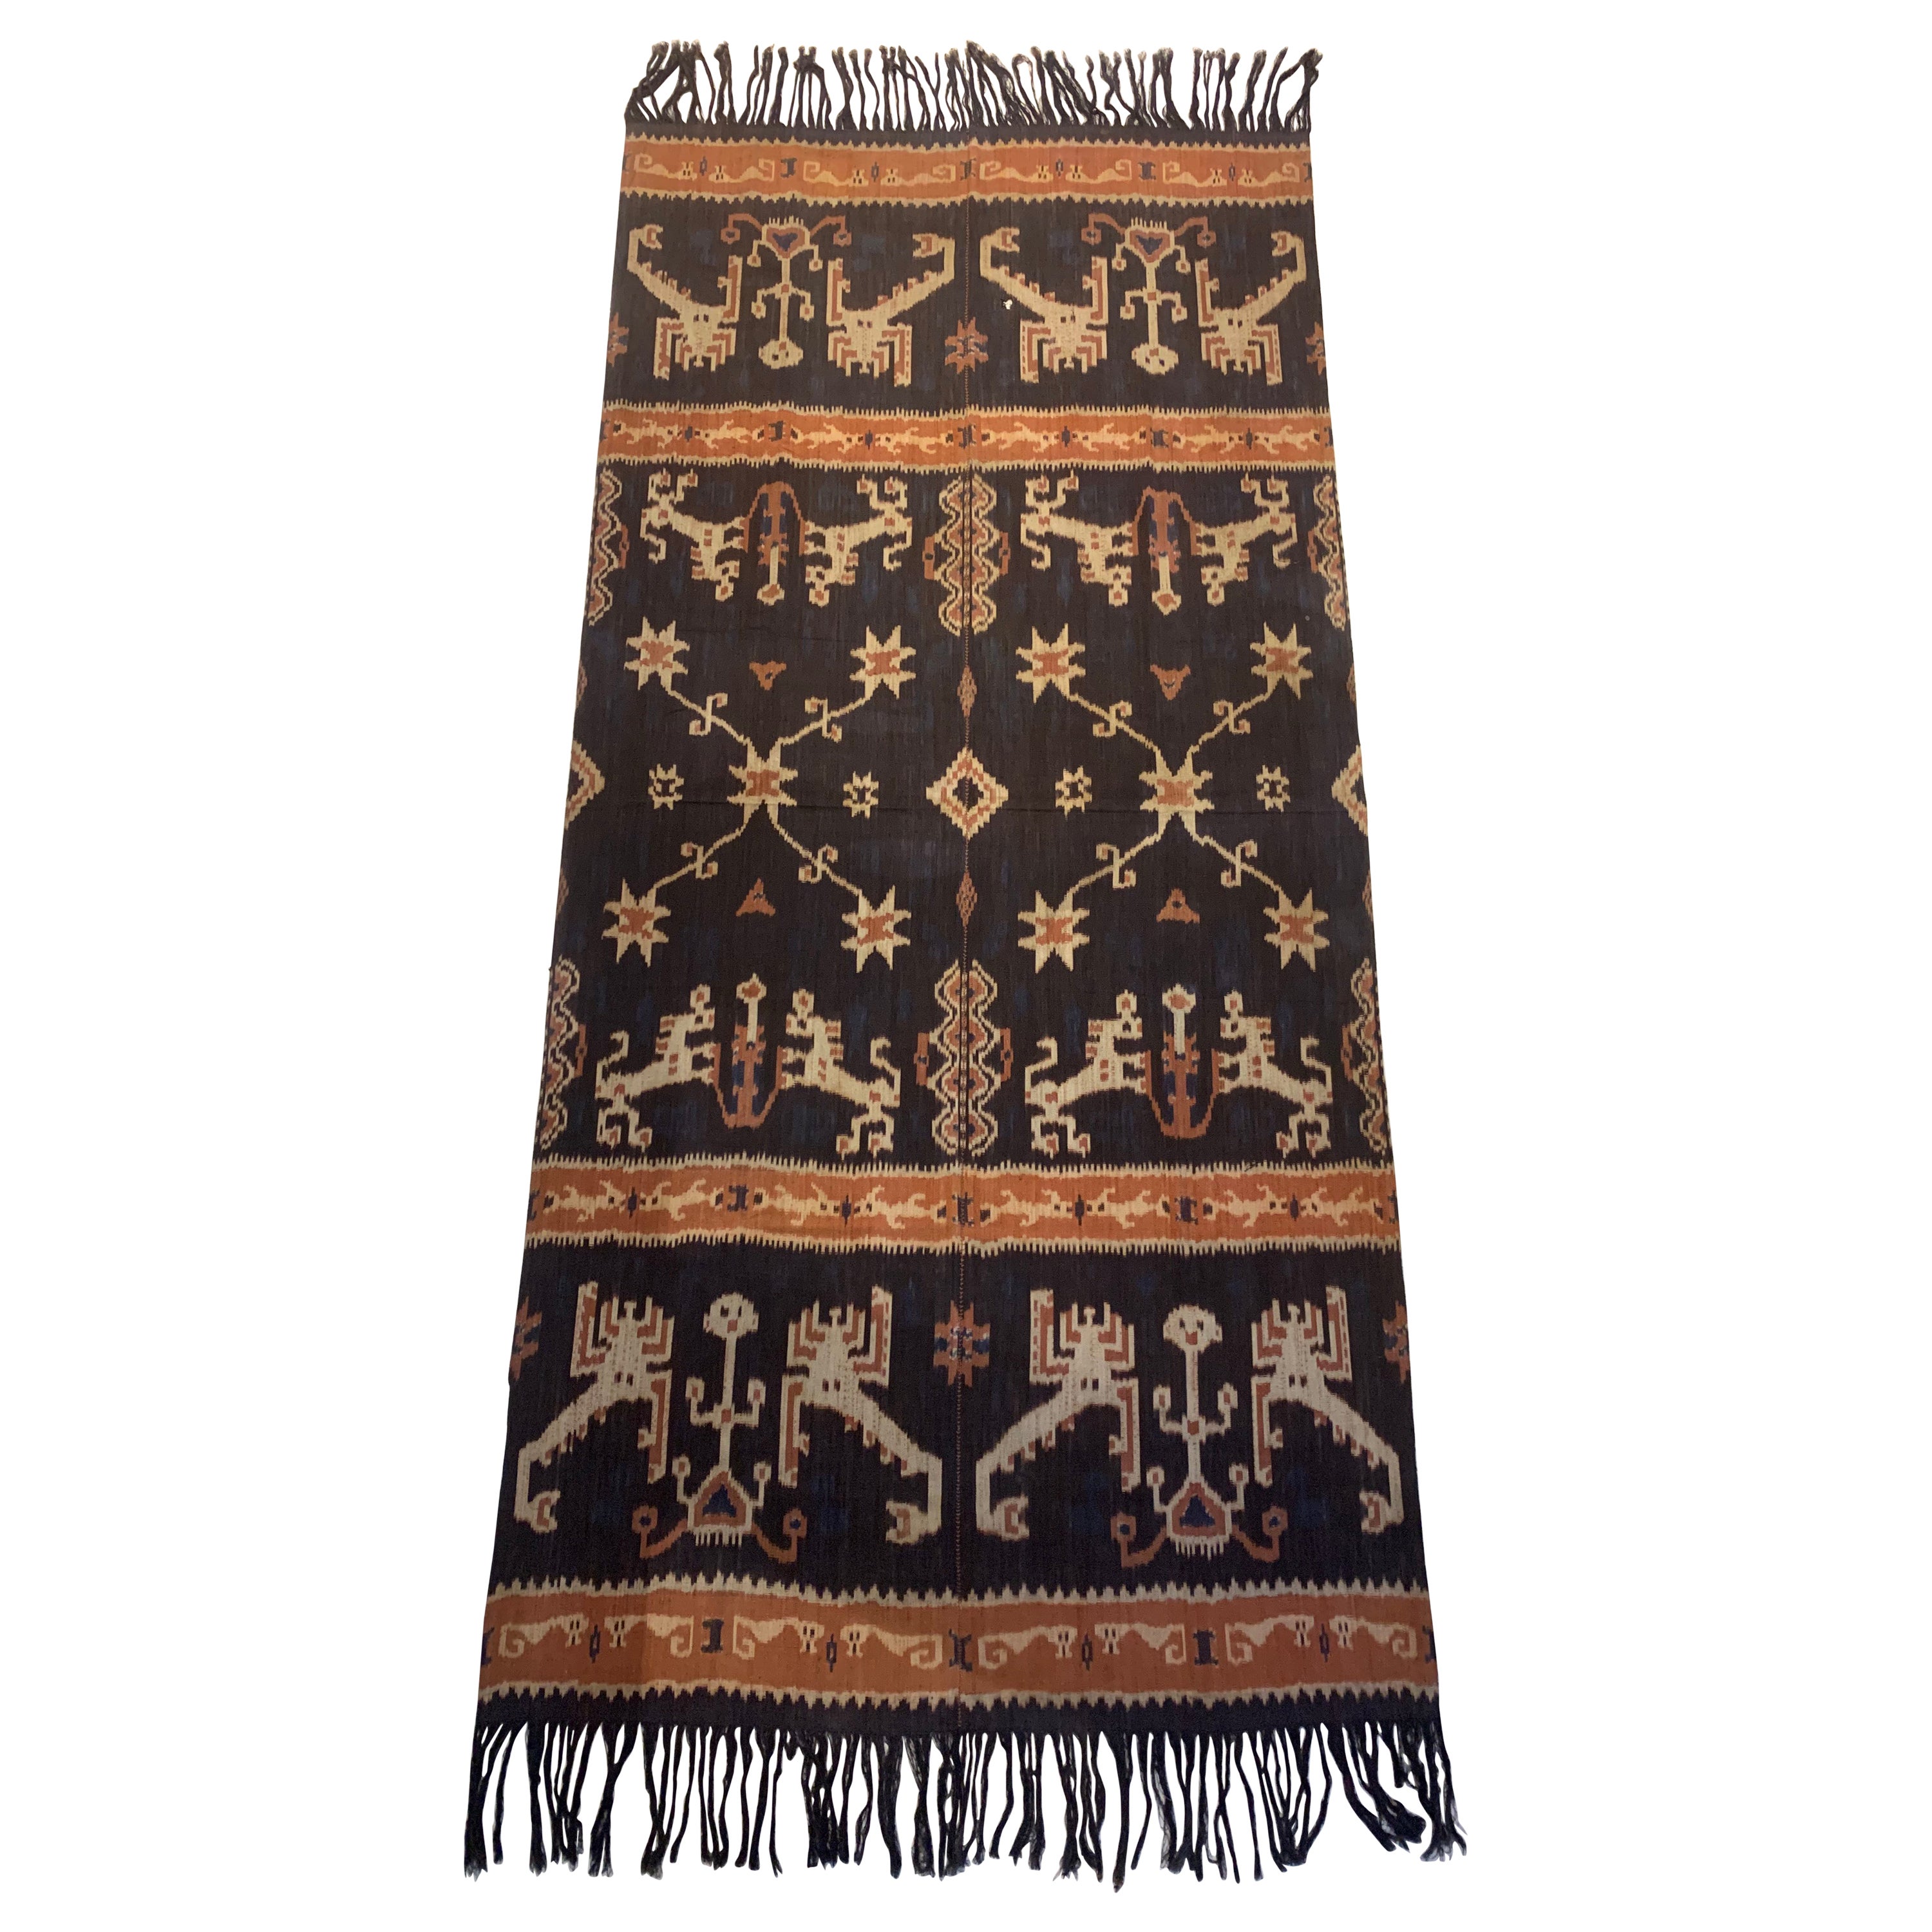 Ikat Textile from Sumba Island Stunning Tribal Motifs, Indonesia 